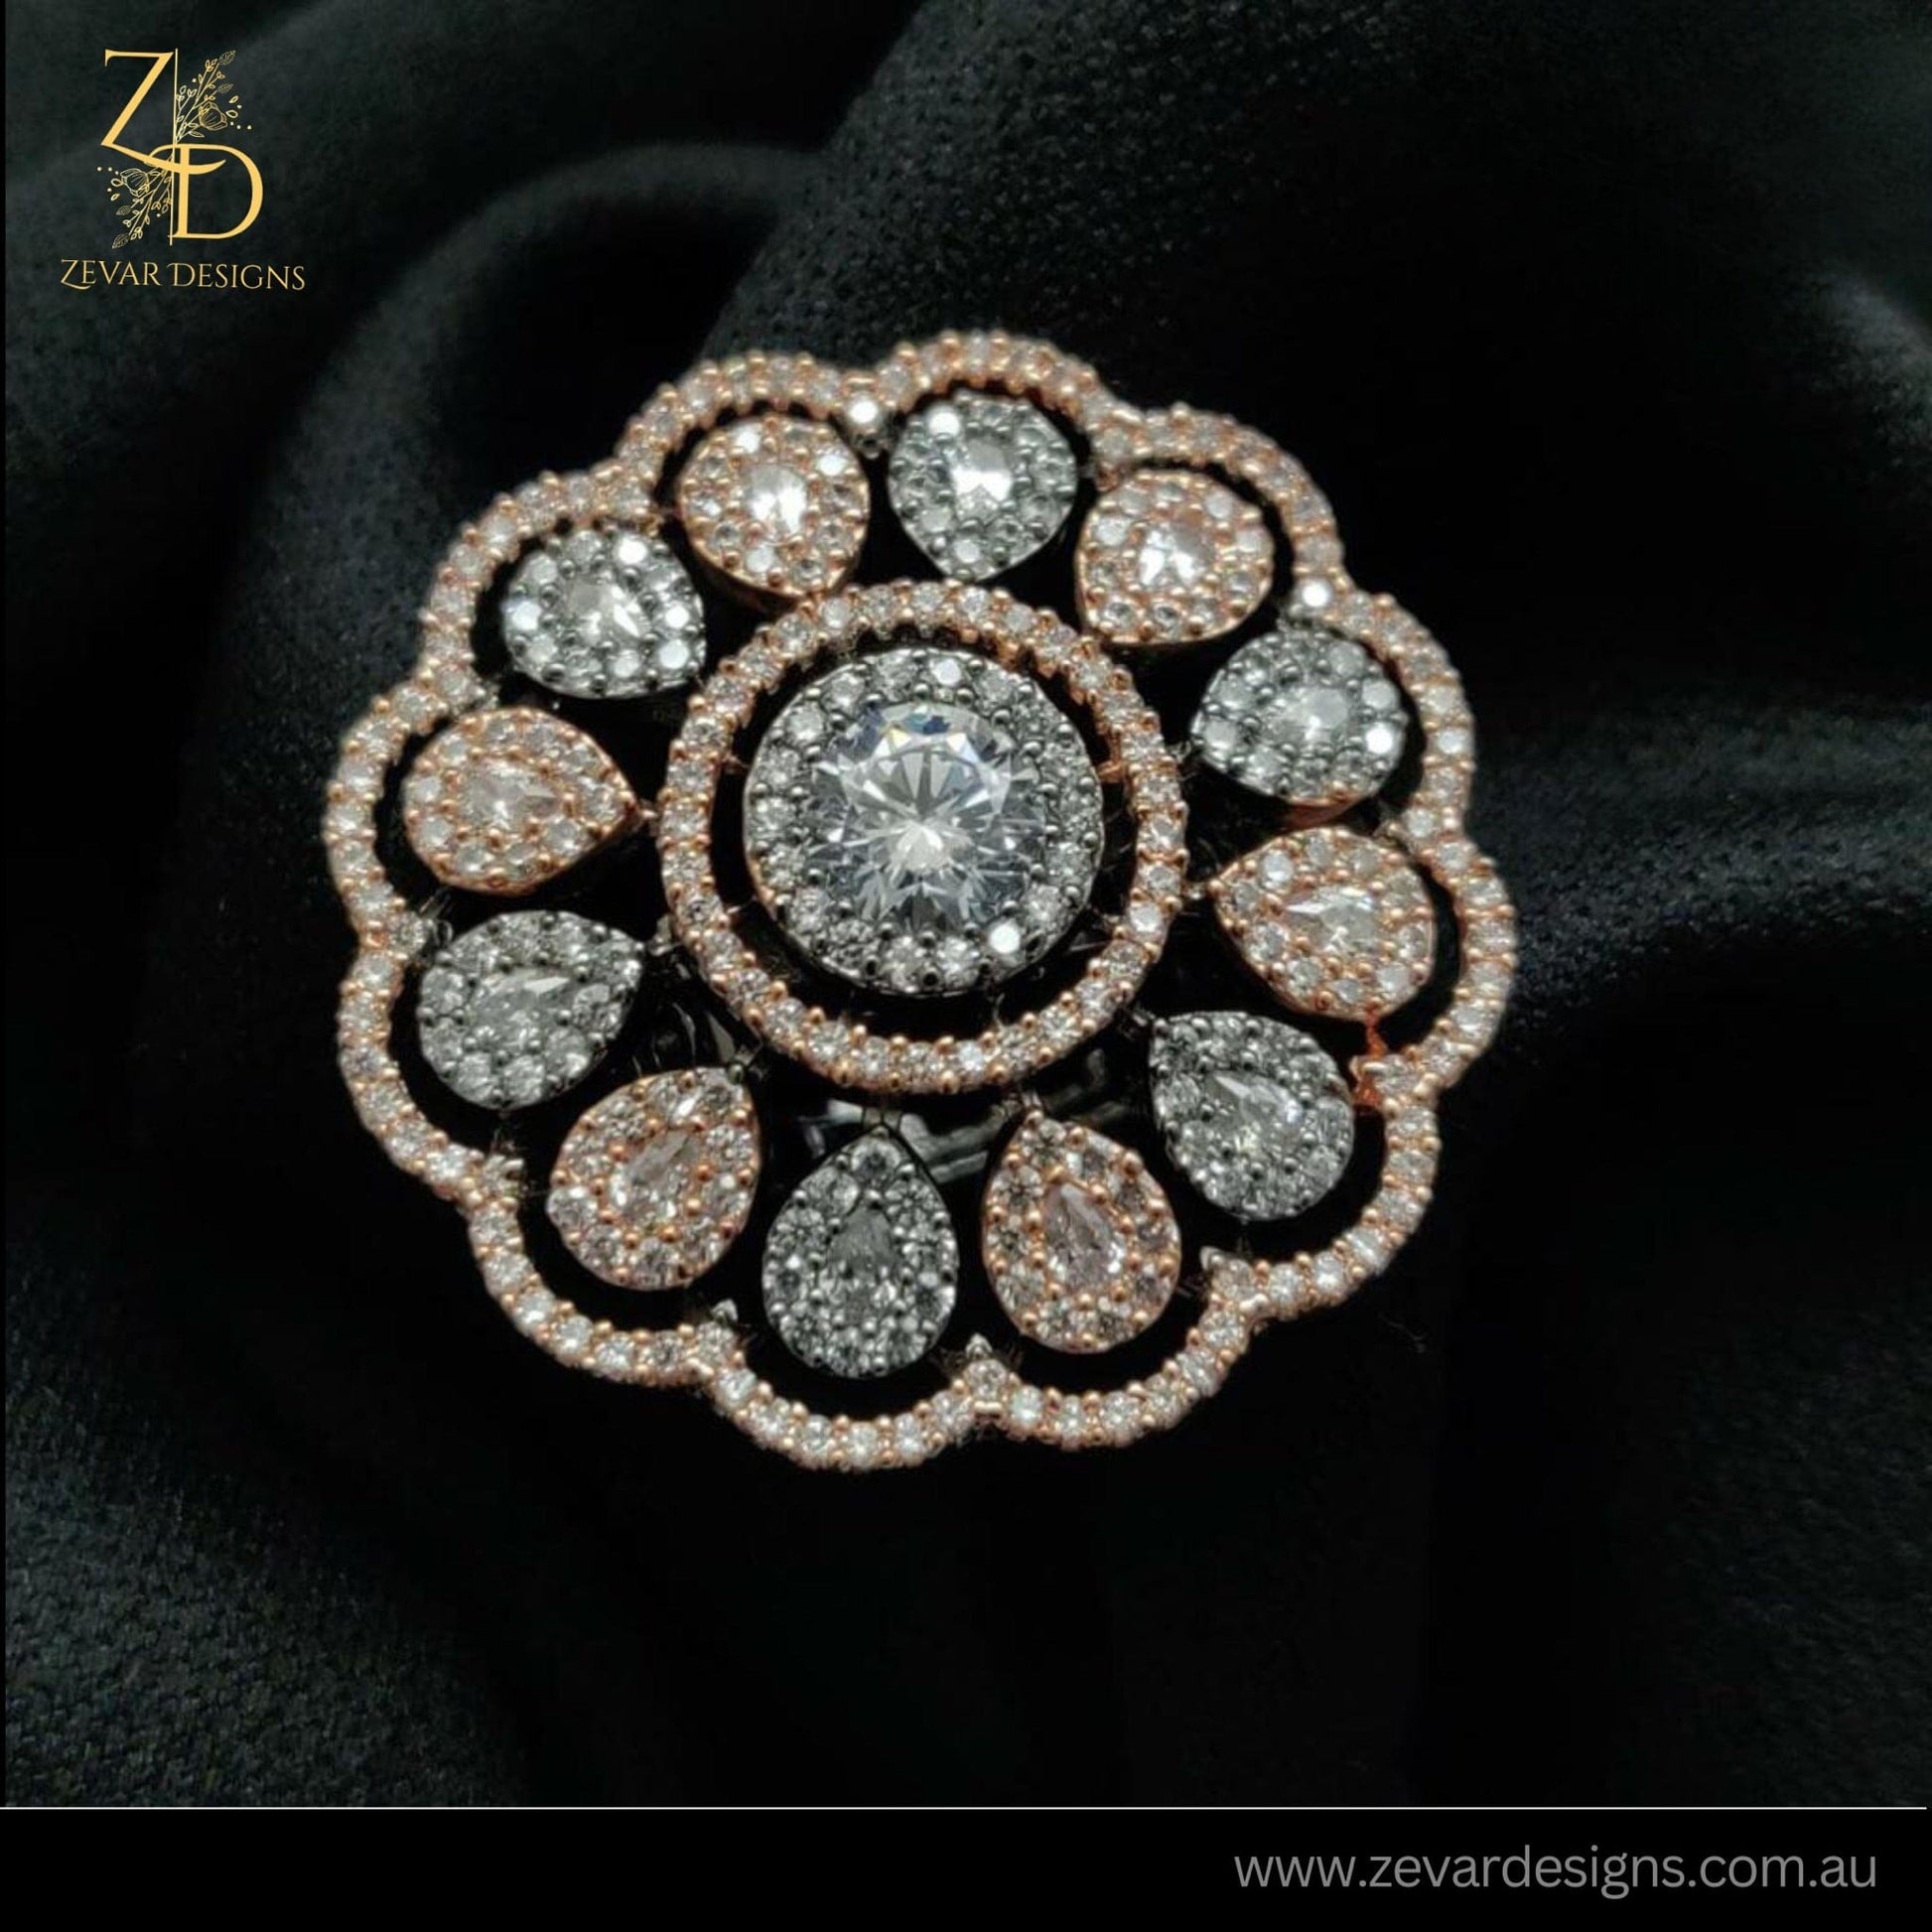 Zevar Designs Rings - AD Rose Gold & Black Finish AD Ring